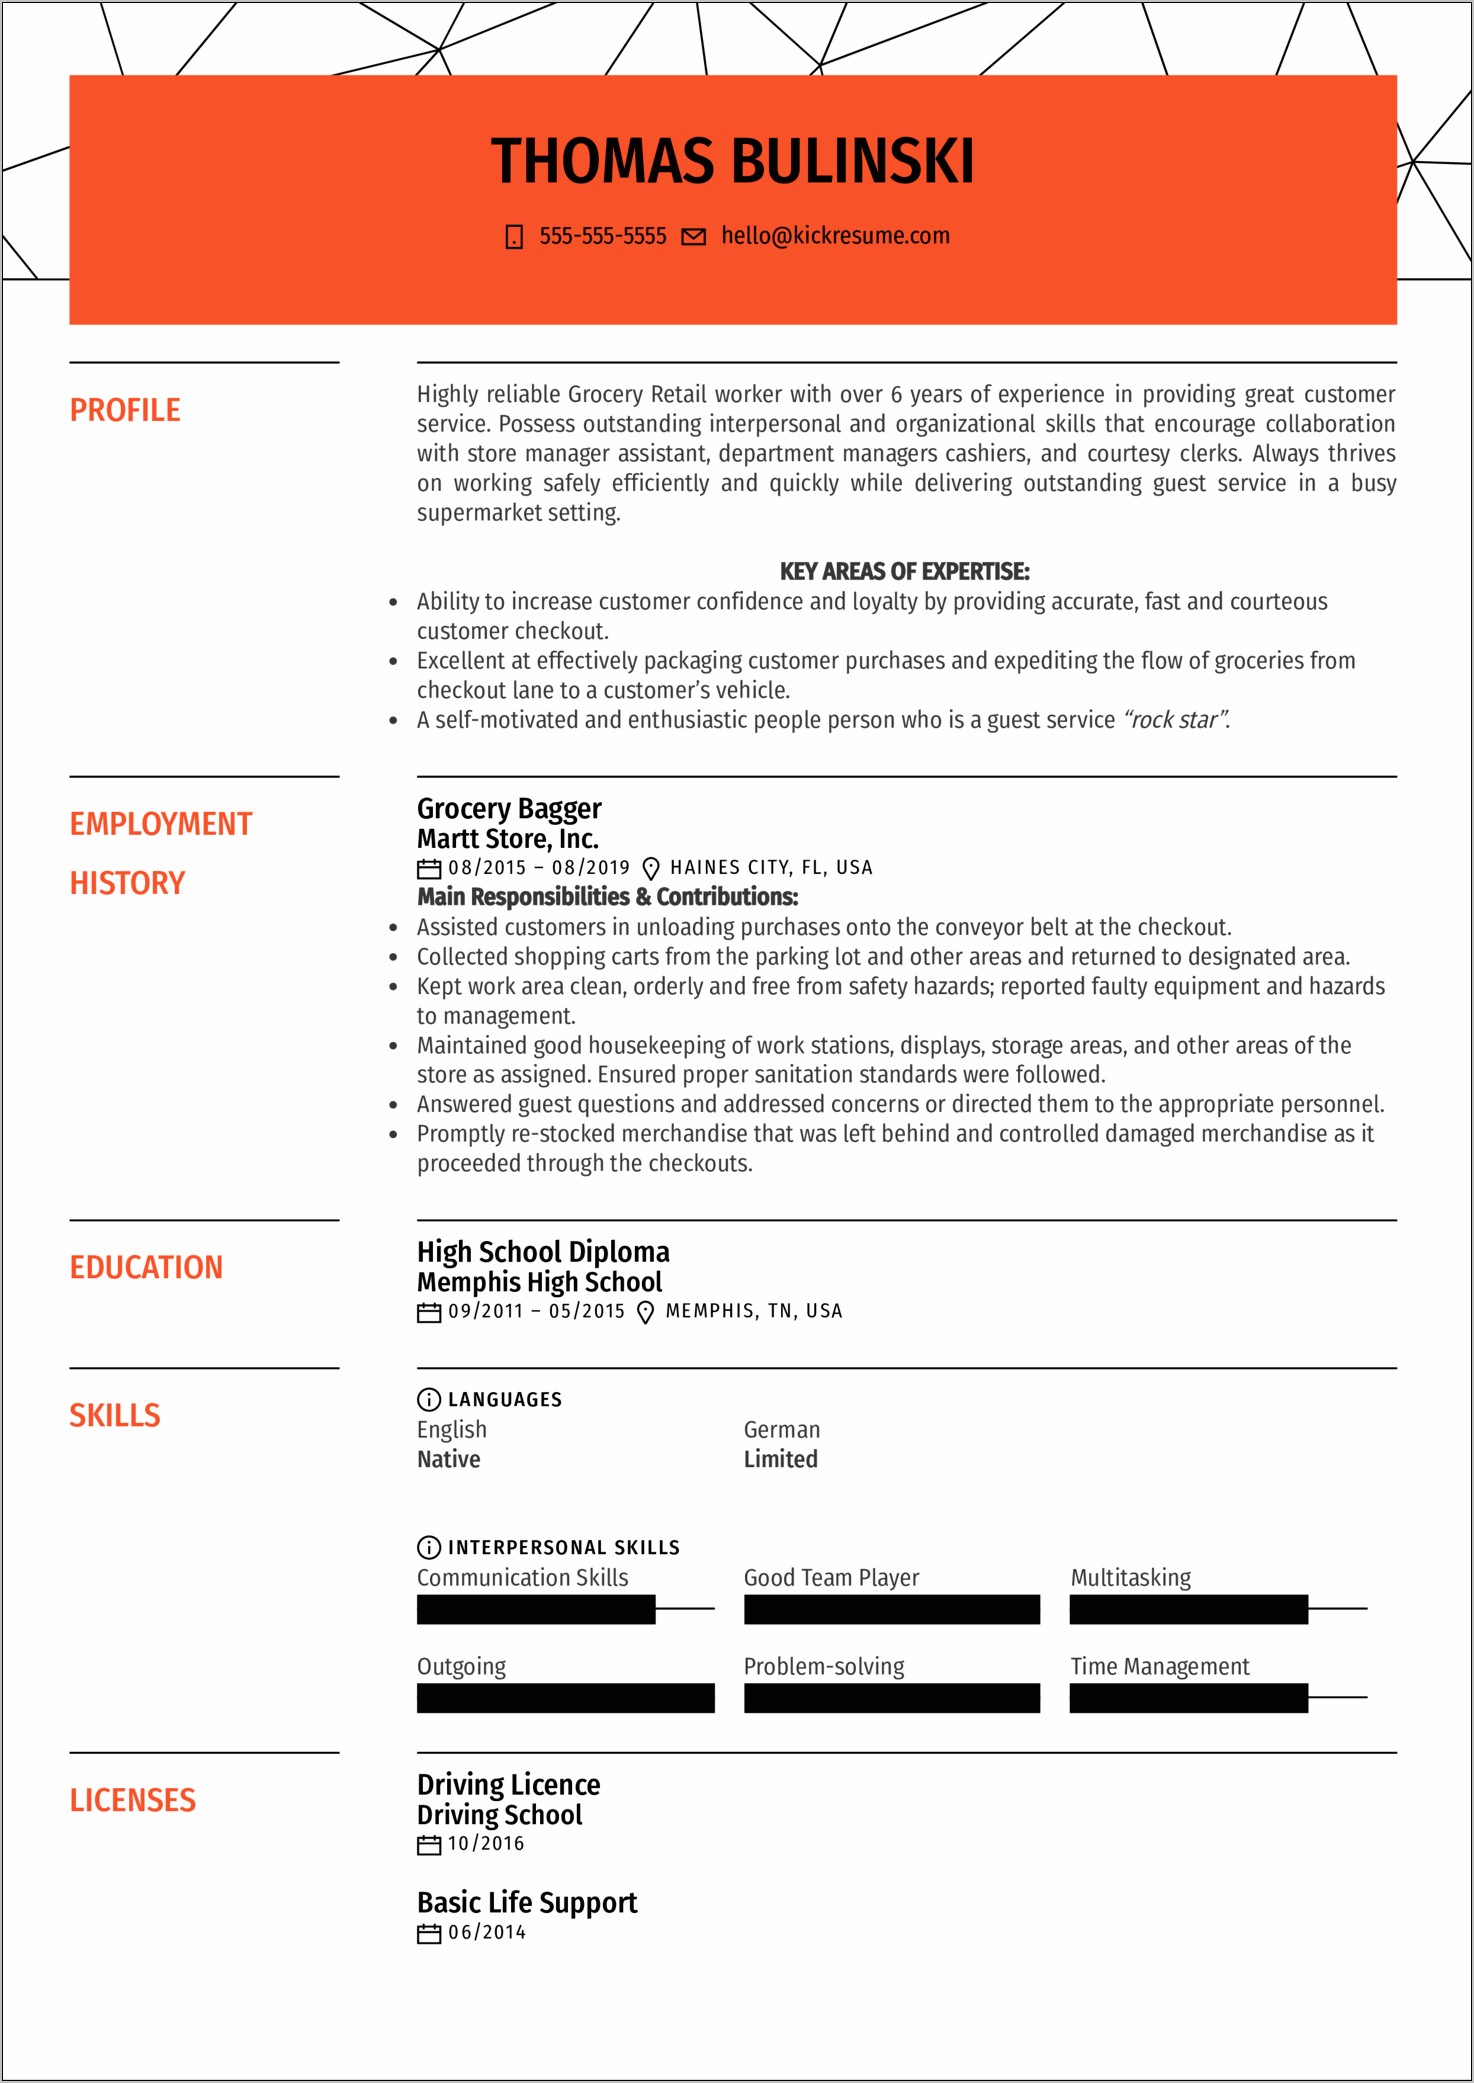 Expeditor Job Description For Resume